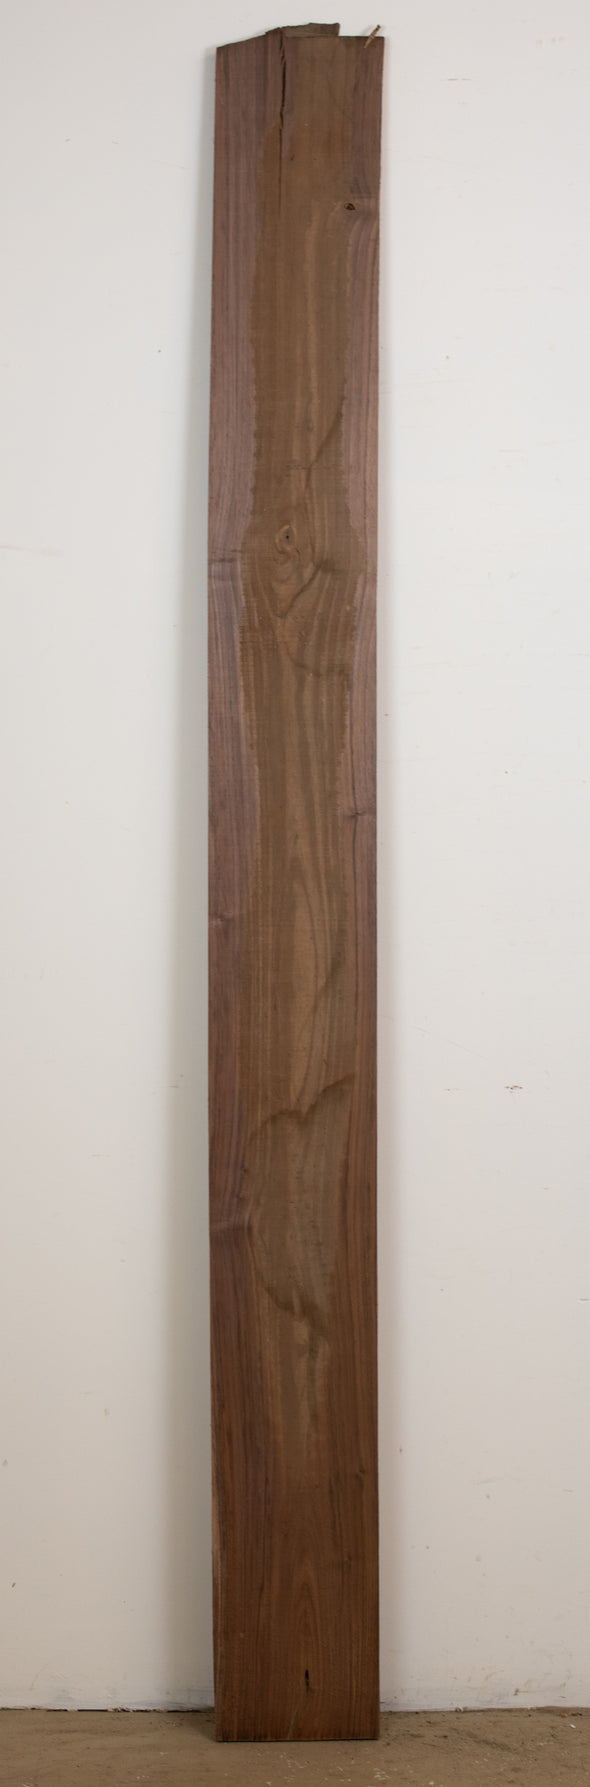 Lumber - L101